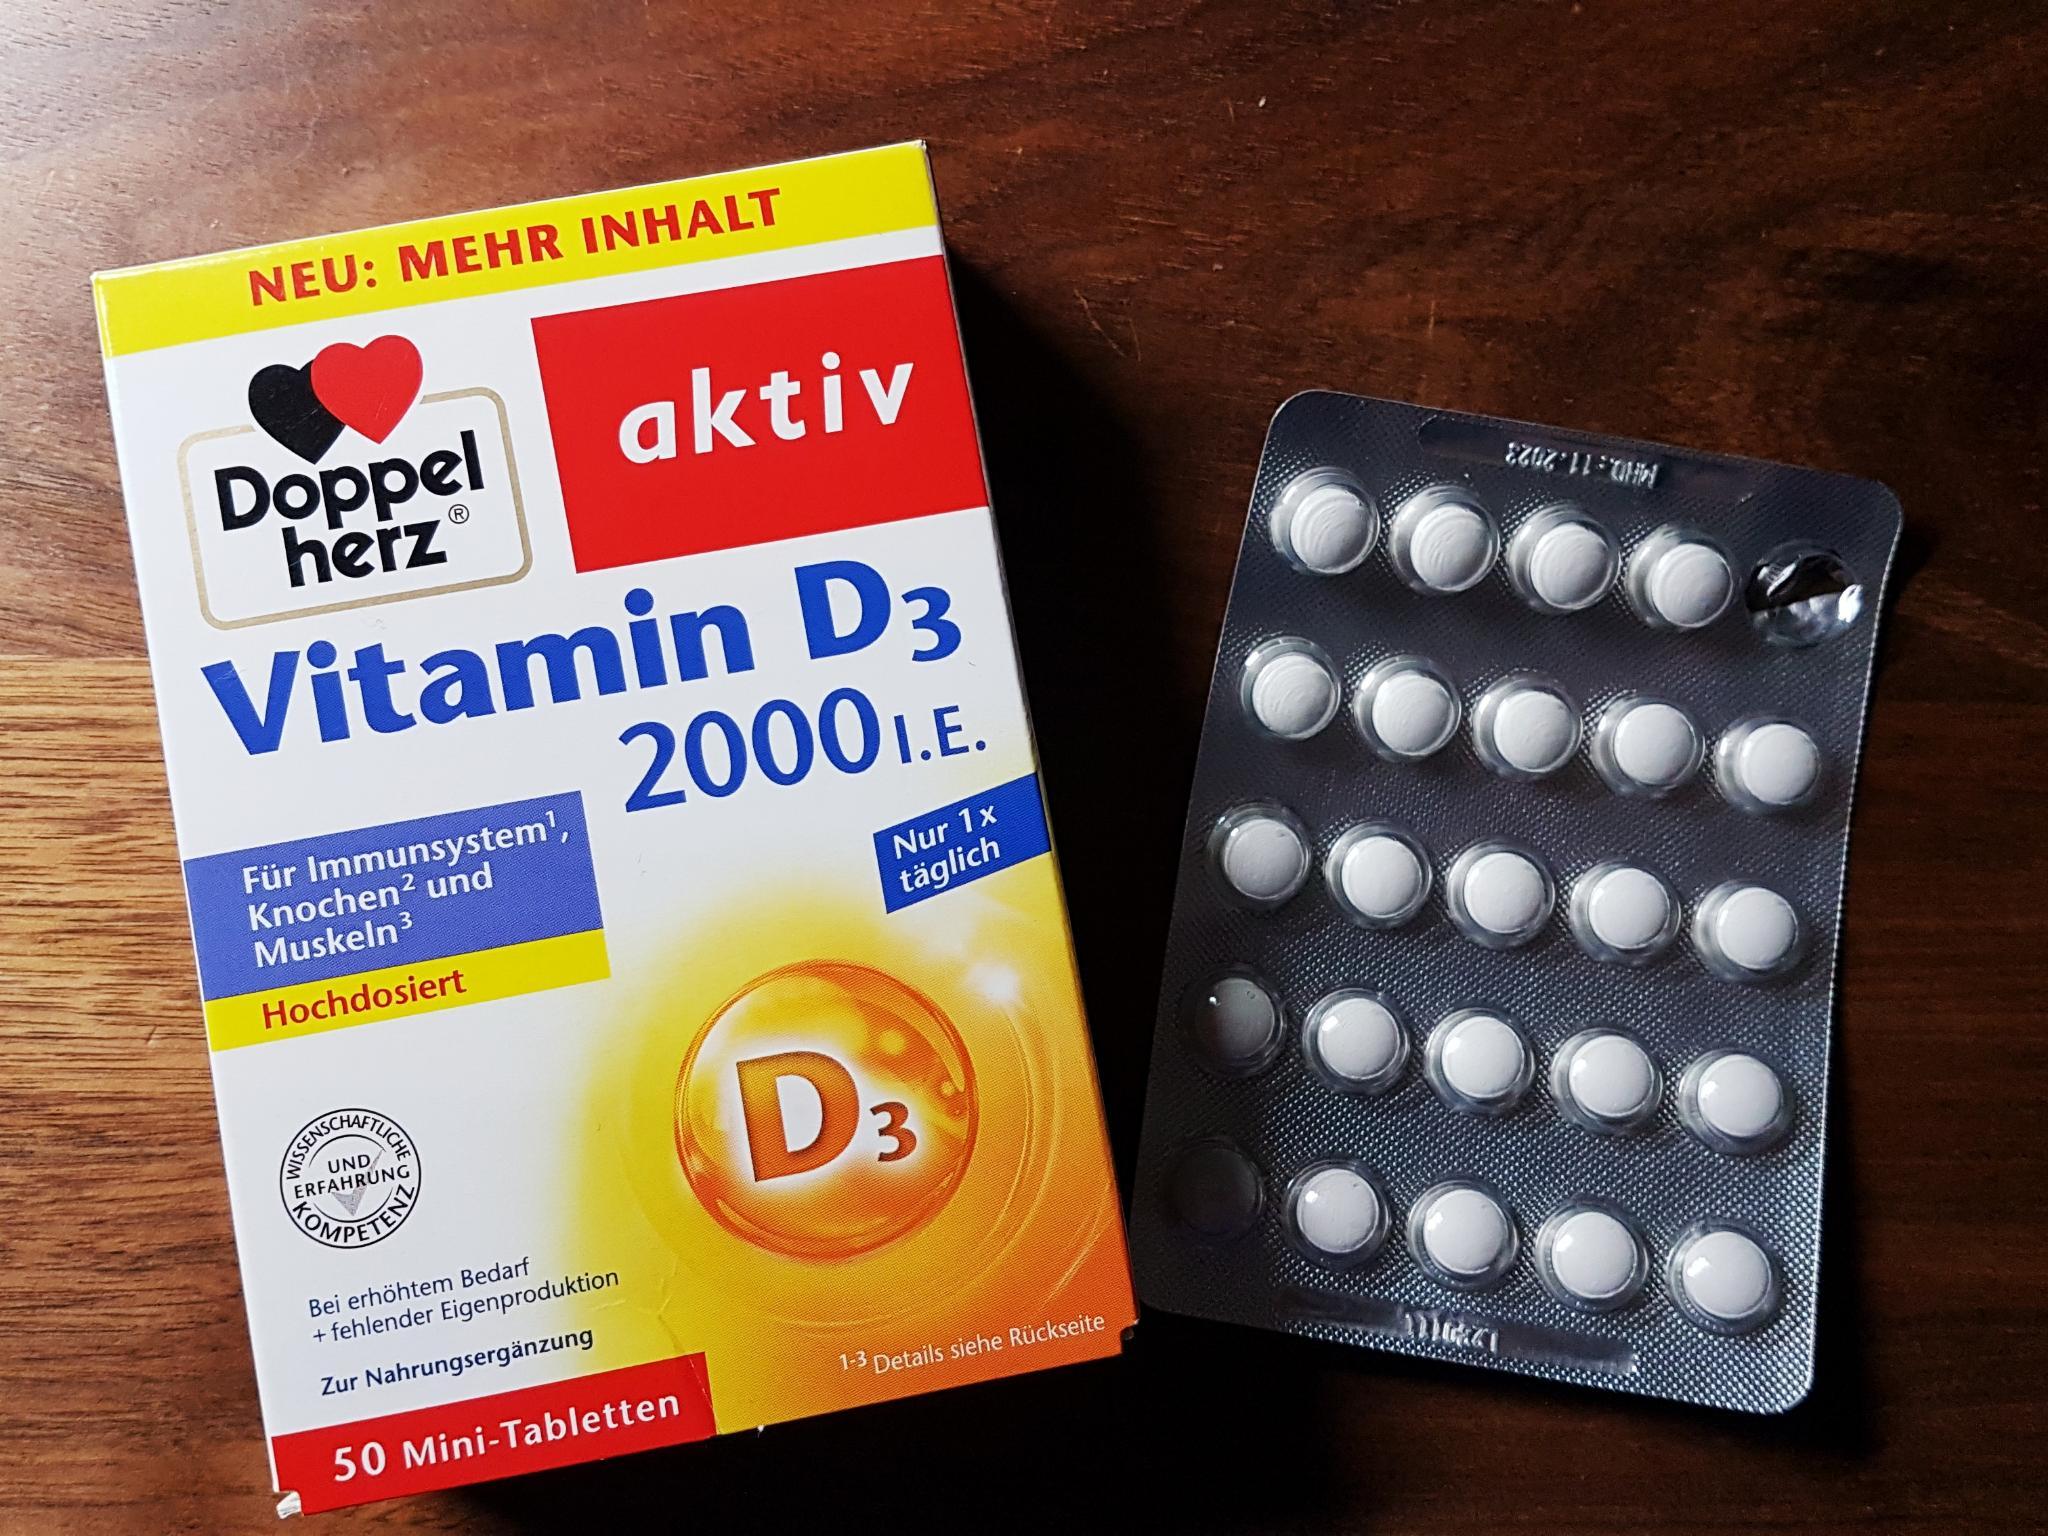 DoppelHerz: Vitamin D3 / Queisser Pharma . Bild: cc Franziska Köppe | madiko